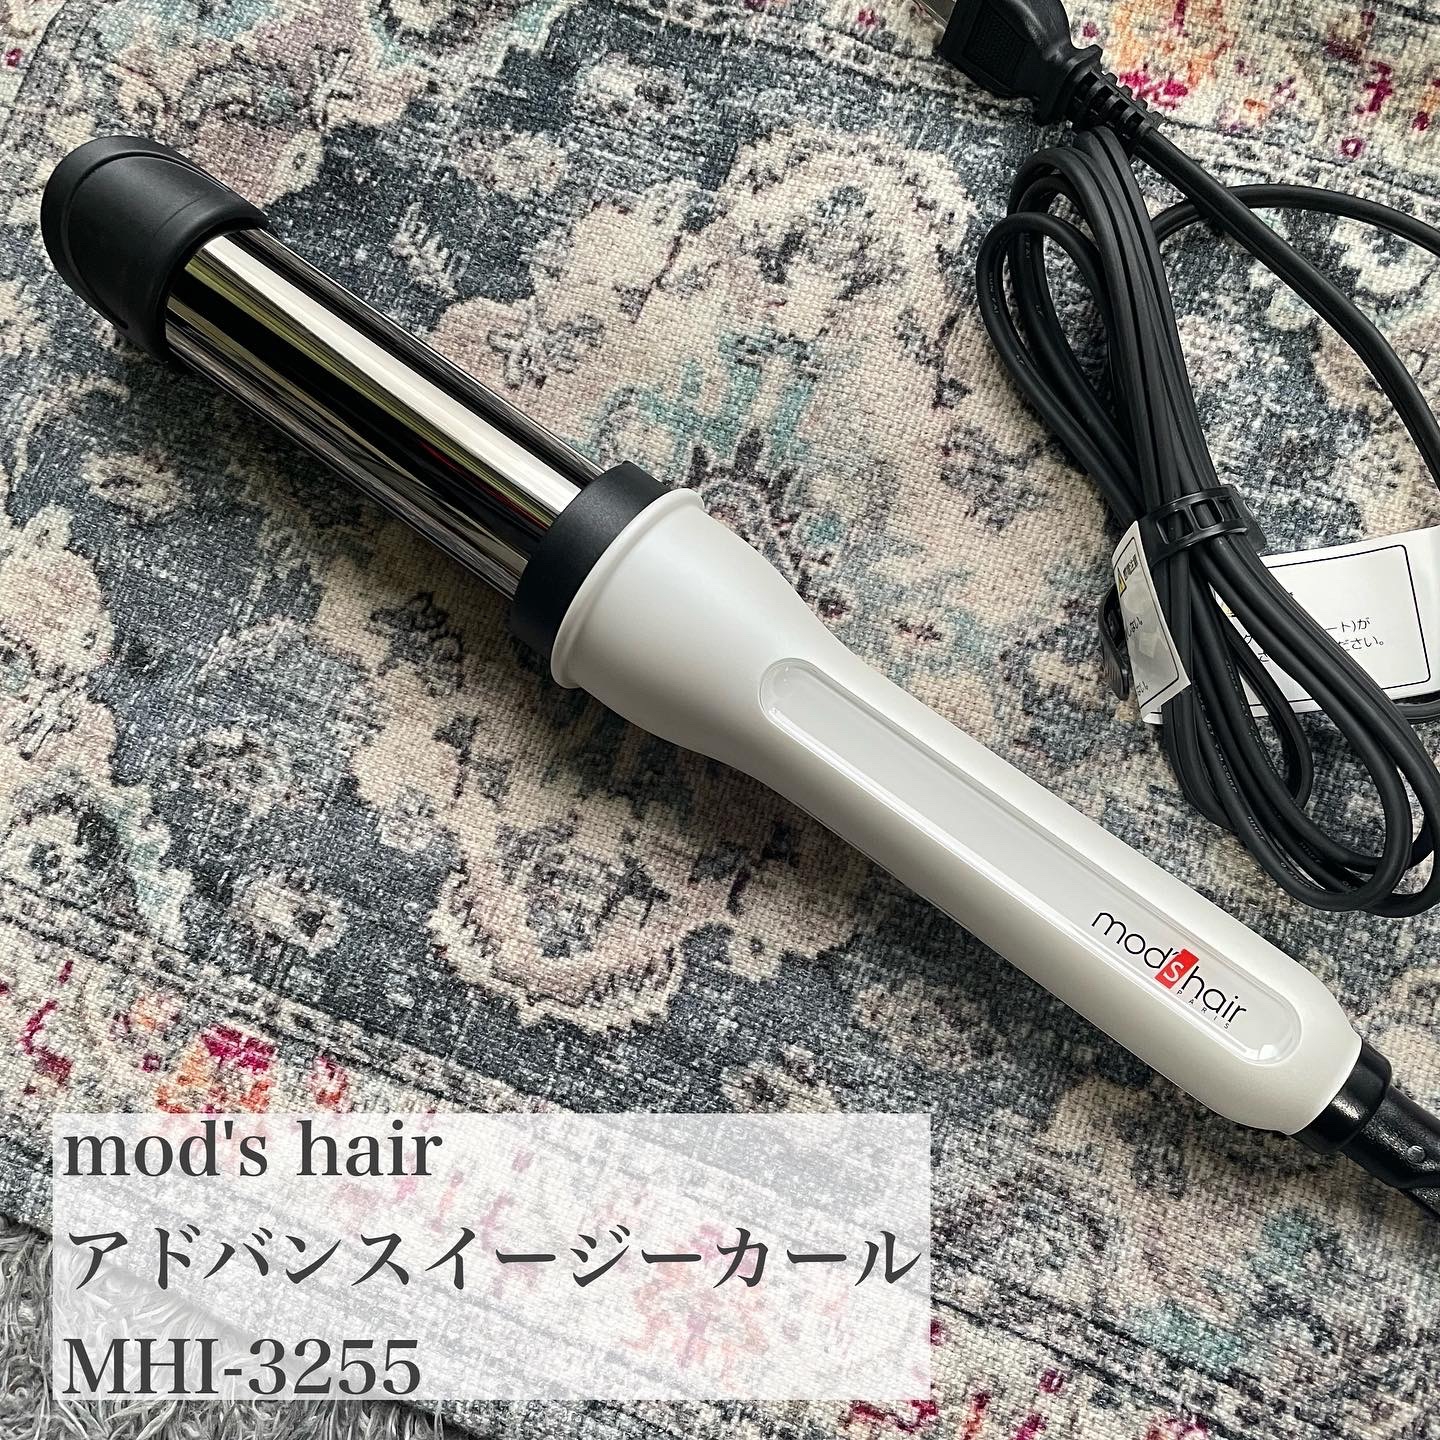 Mod S Hair モッズ ヘア アドバンス イージー カール 32mm Mhi 3255の口コミ 評判はどう 実際に使ったリアルな本音レビュー9件 モノシル